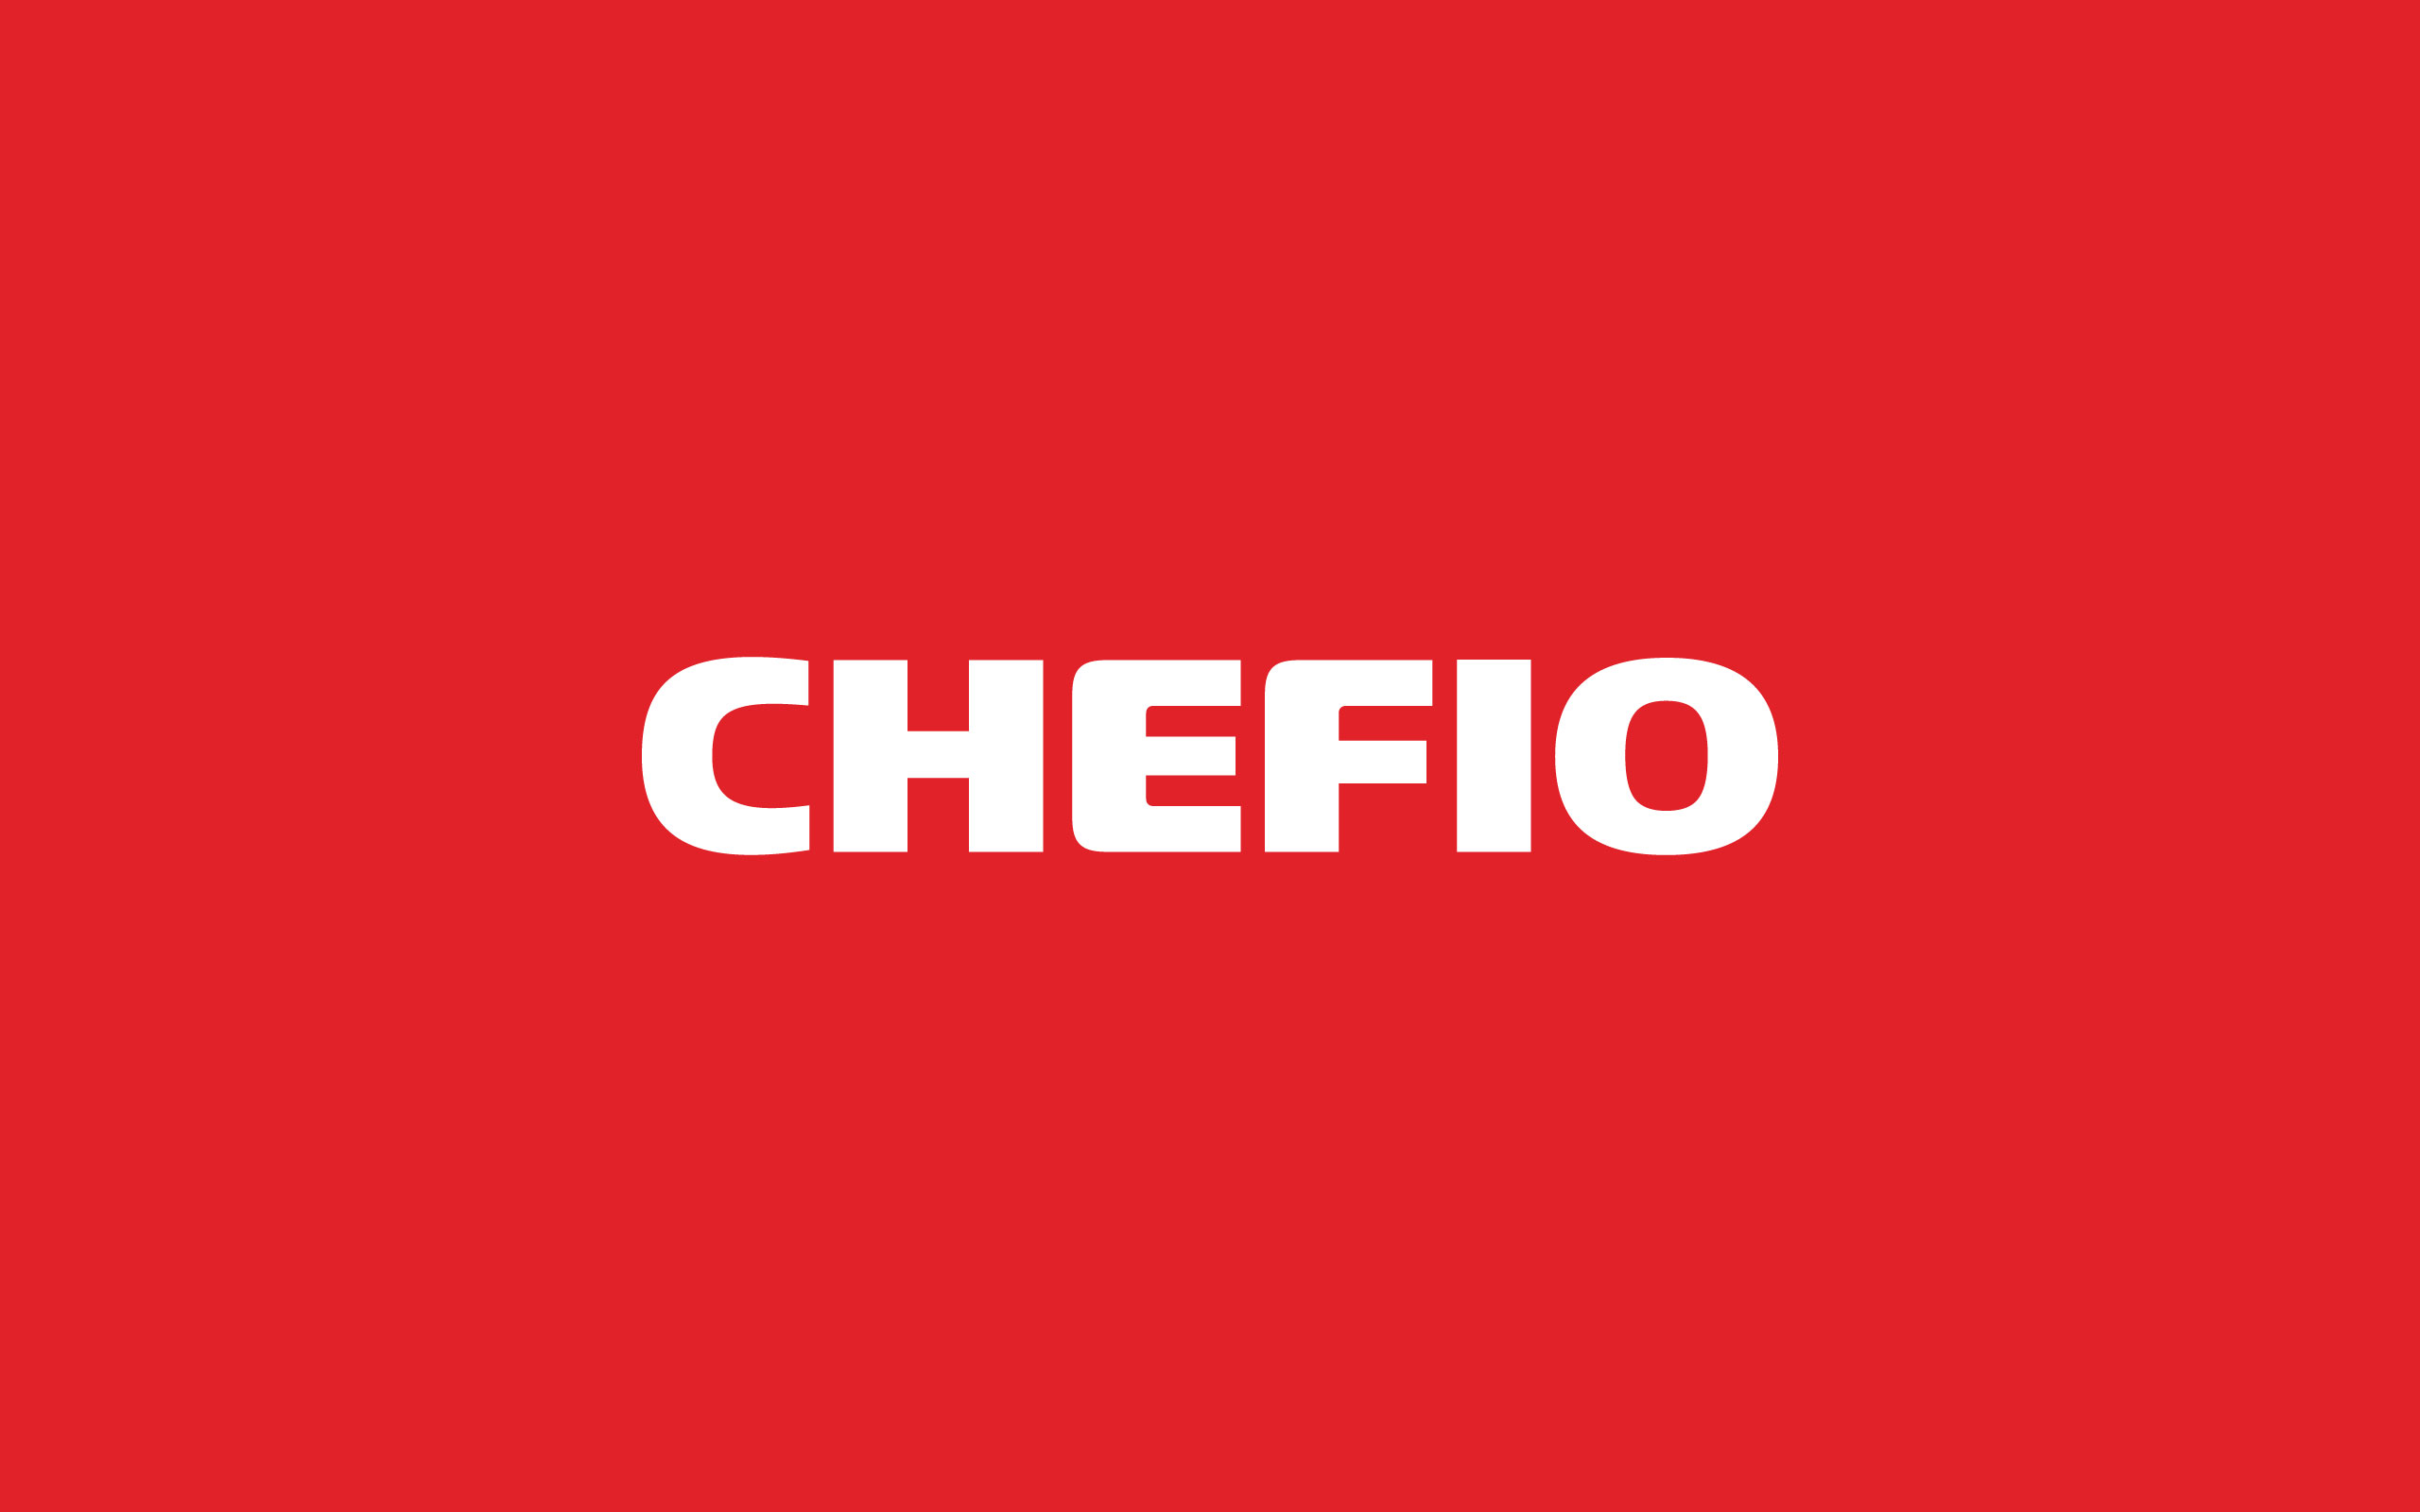 Chefio Brand Design By Tree Creative